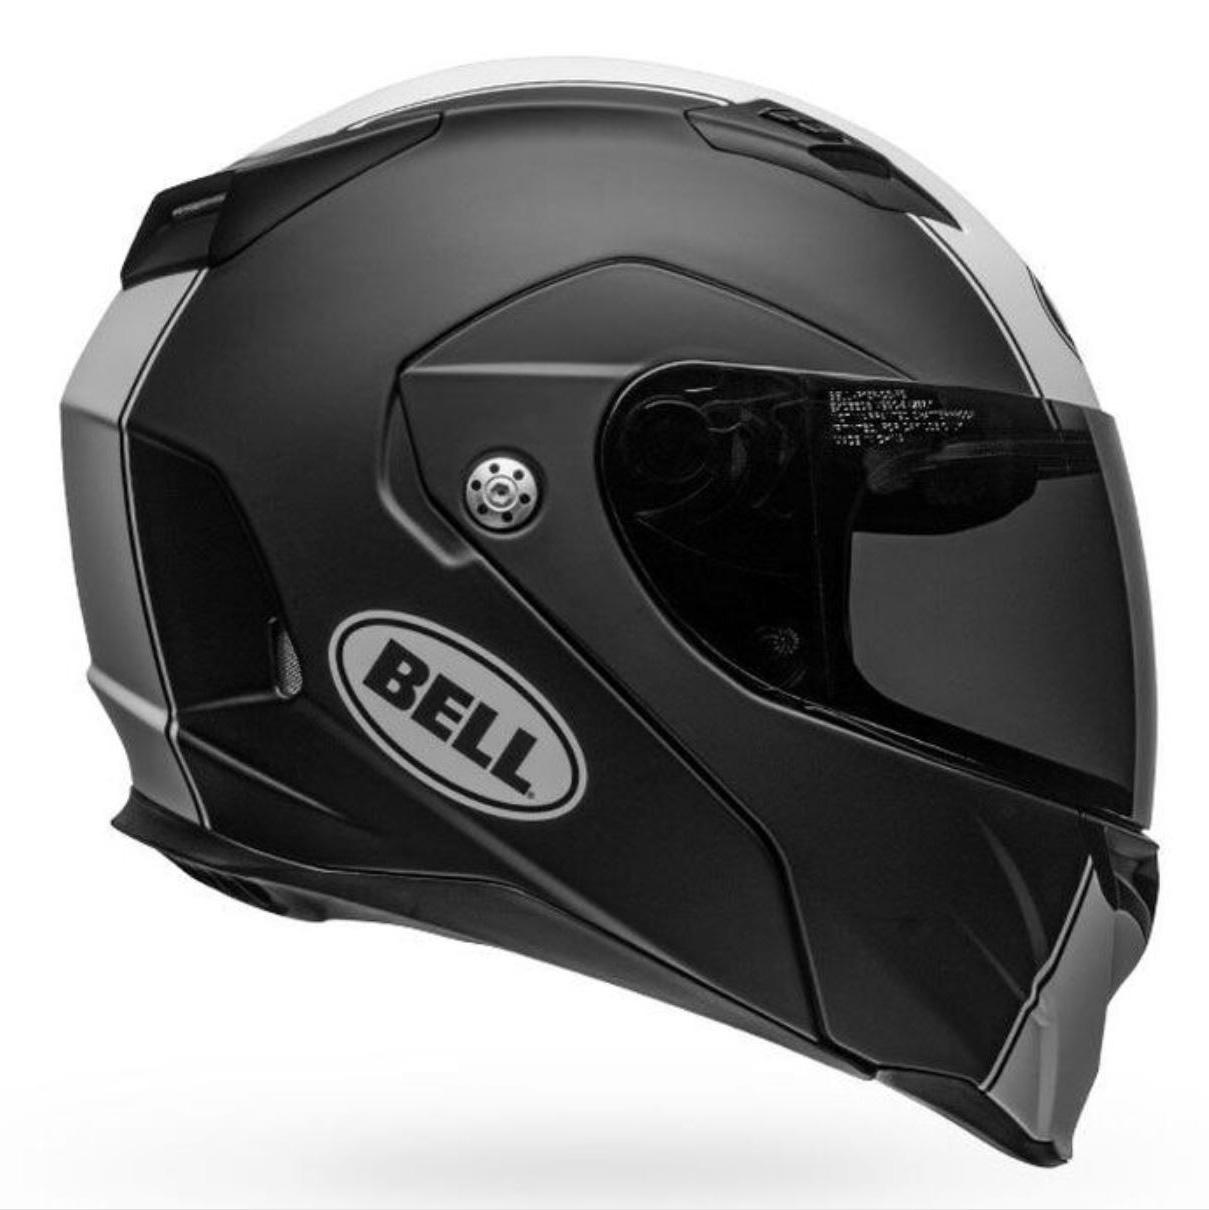 Bell helmet sizing chart Helmet sizes for youth, women and men